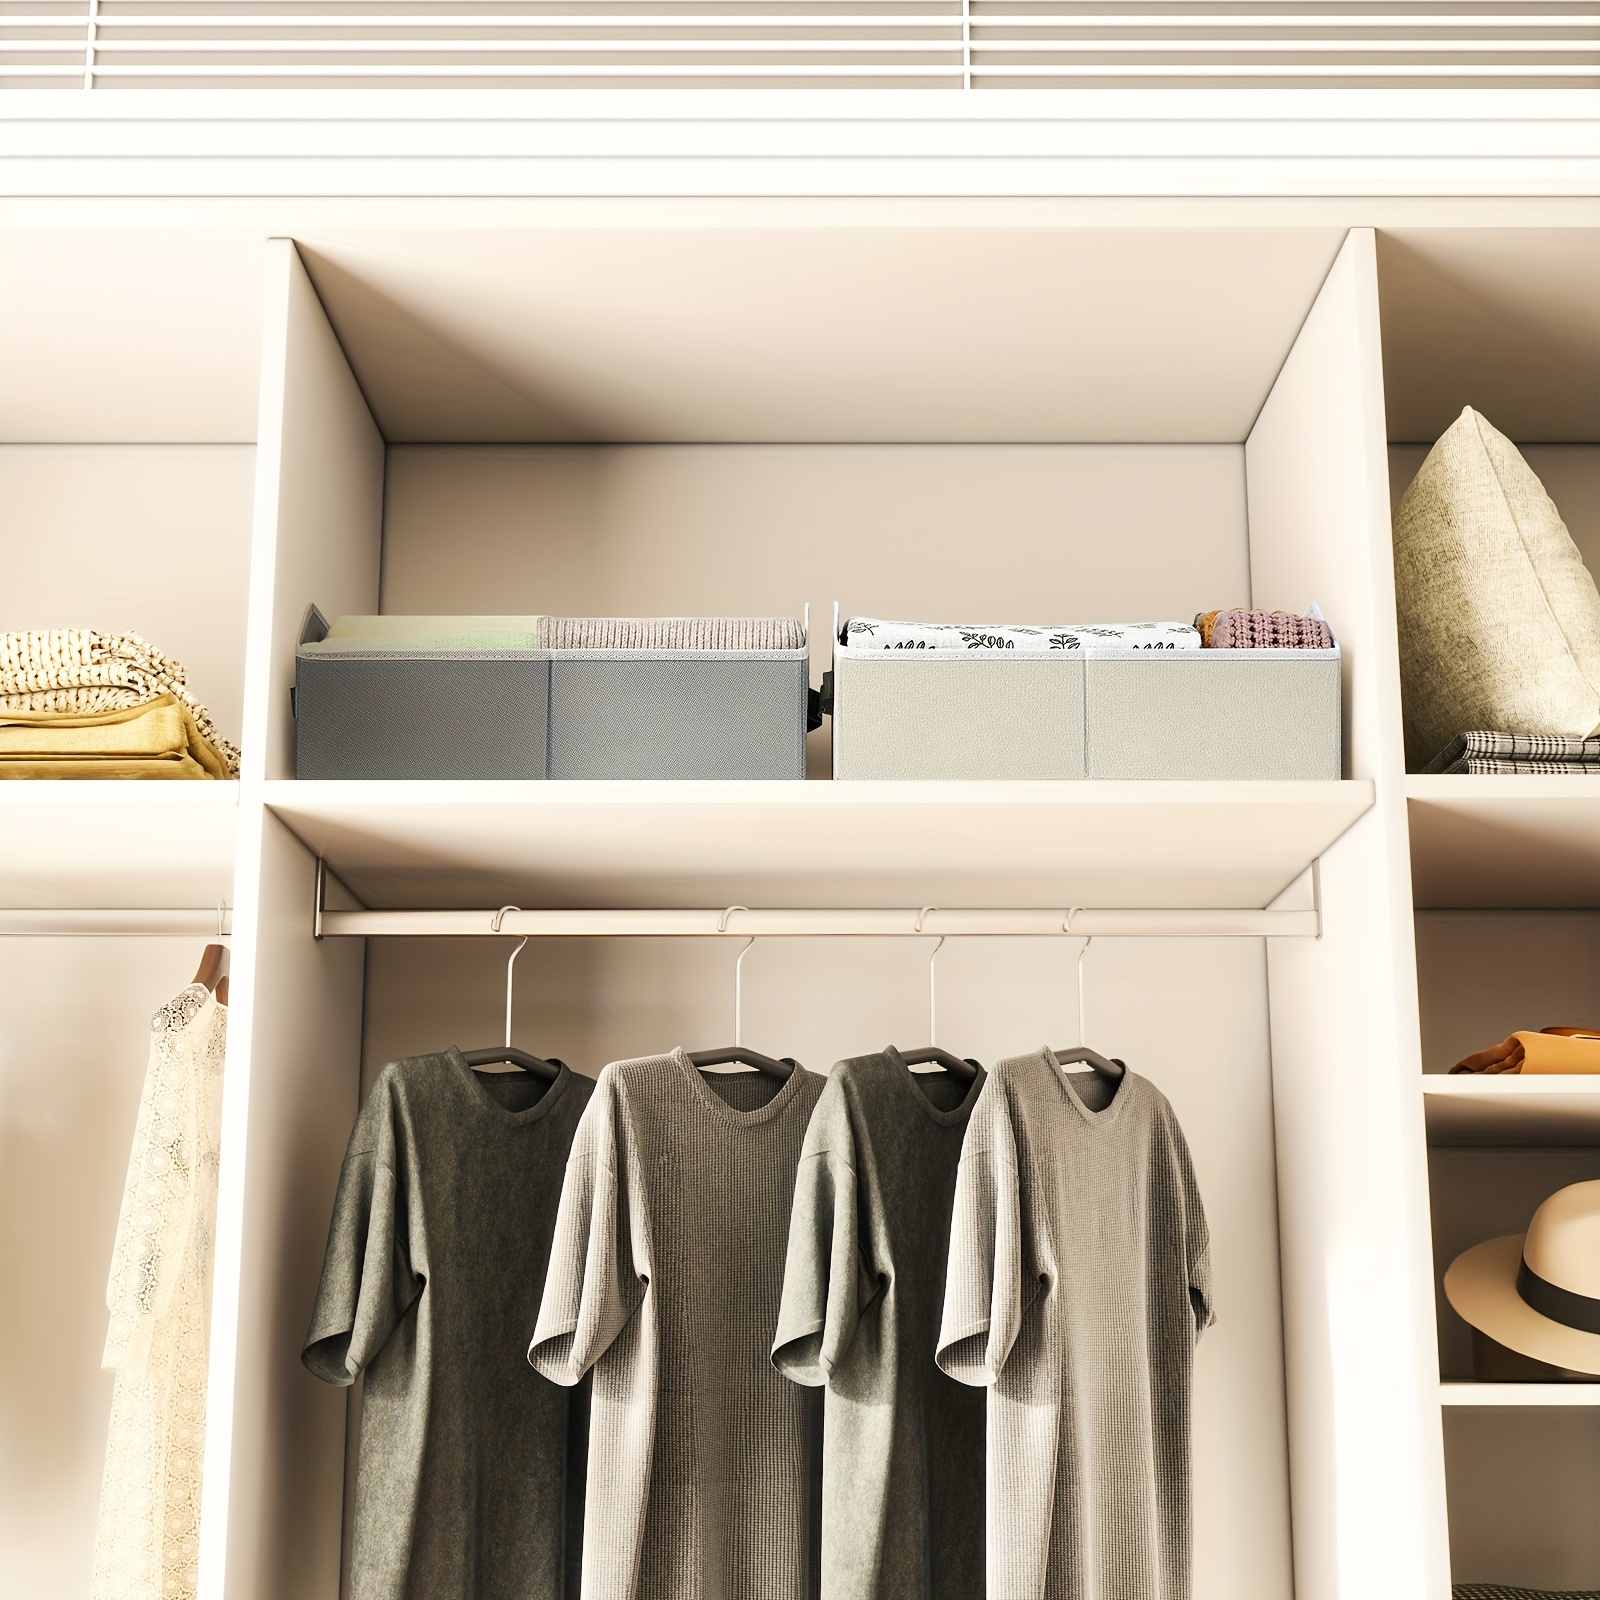 Homsorout Closet Basket, Trapezoid Storage Bins with Handles, 6 Pack  Storage Baksets for Organizing, Foldable Storage Bins for Shelves, Linen  Closet